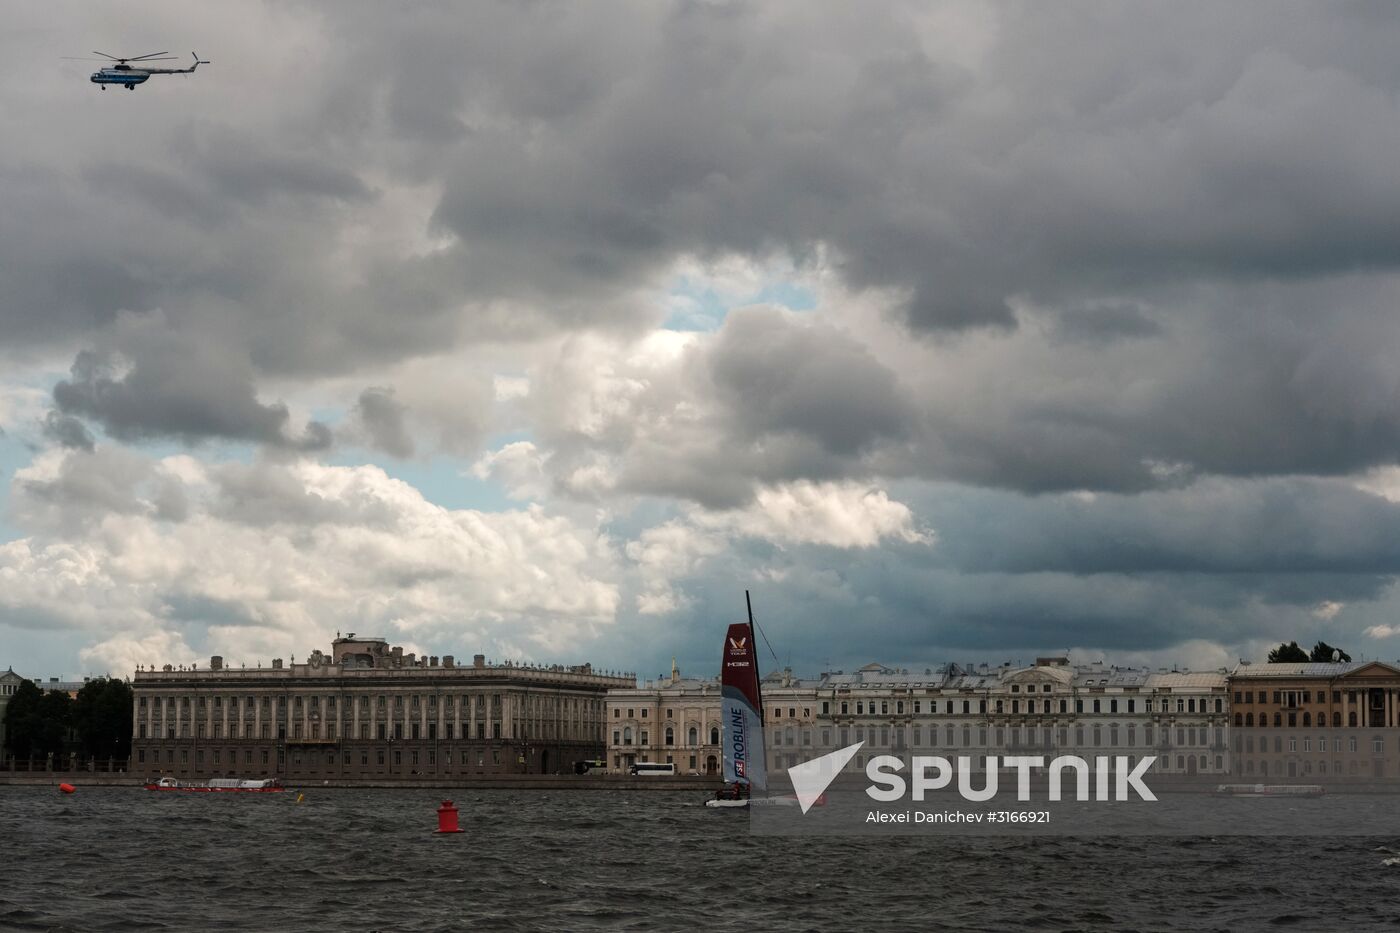 World Match Racing Tour sailing series in St. Petersburg